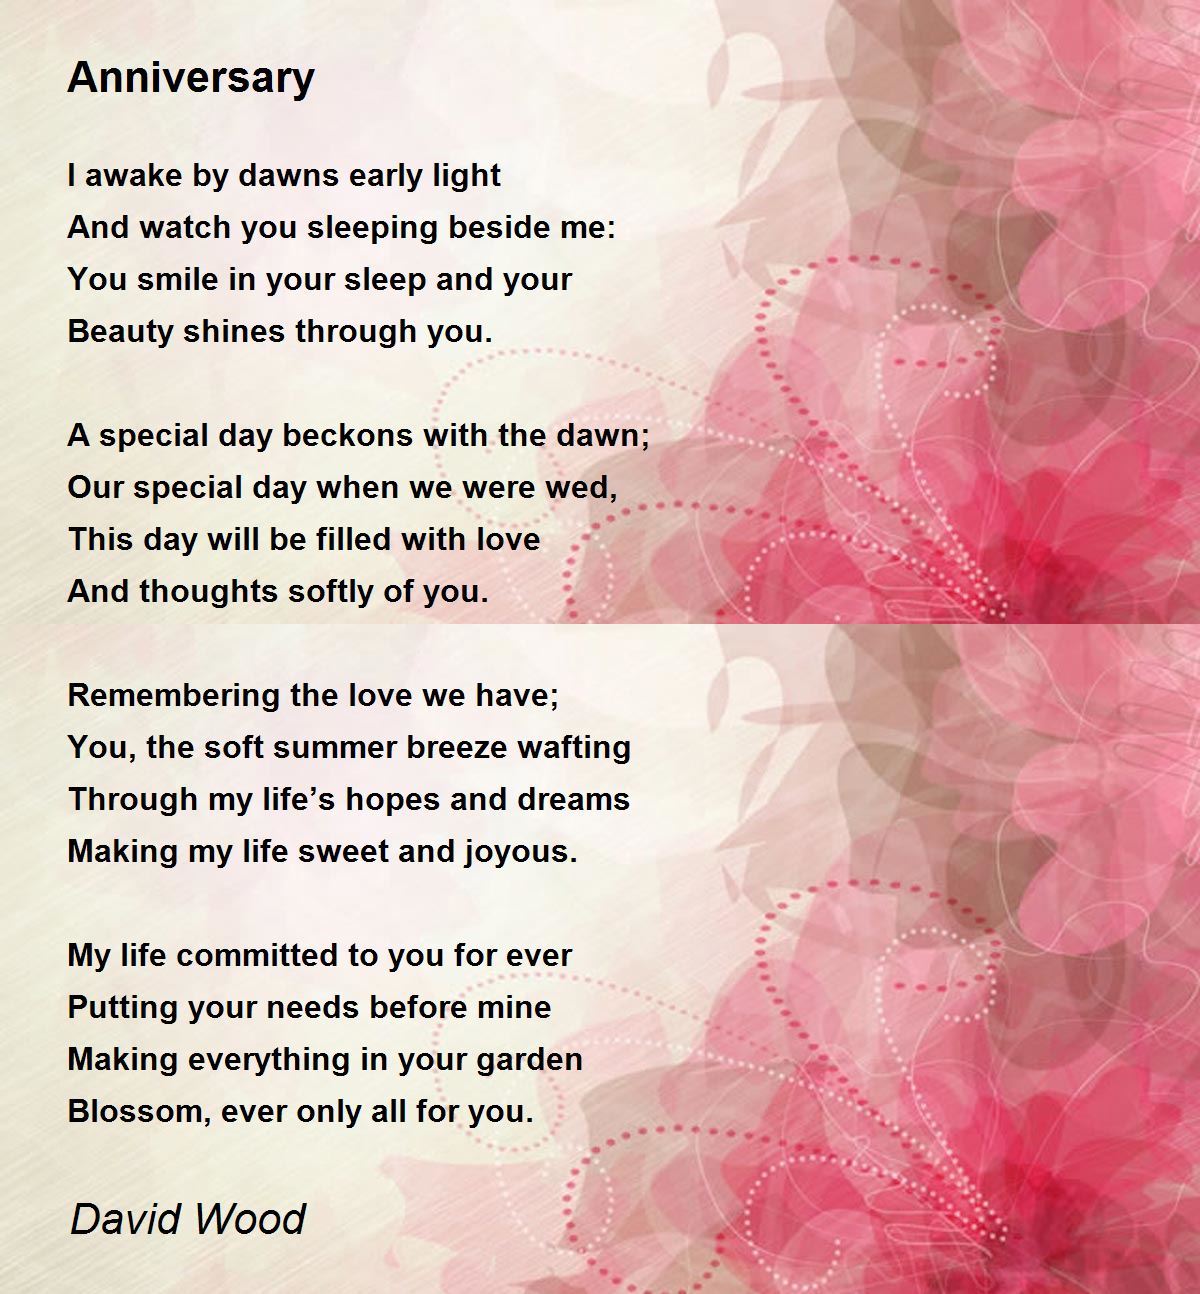 Anniversary Poem by David Wood - Poem Hunter